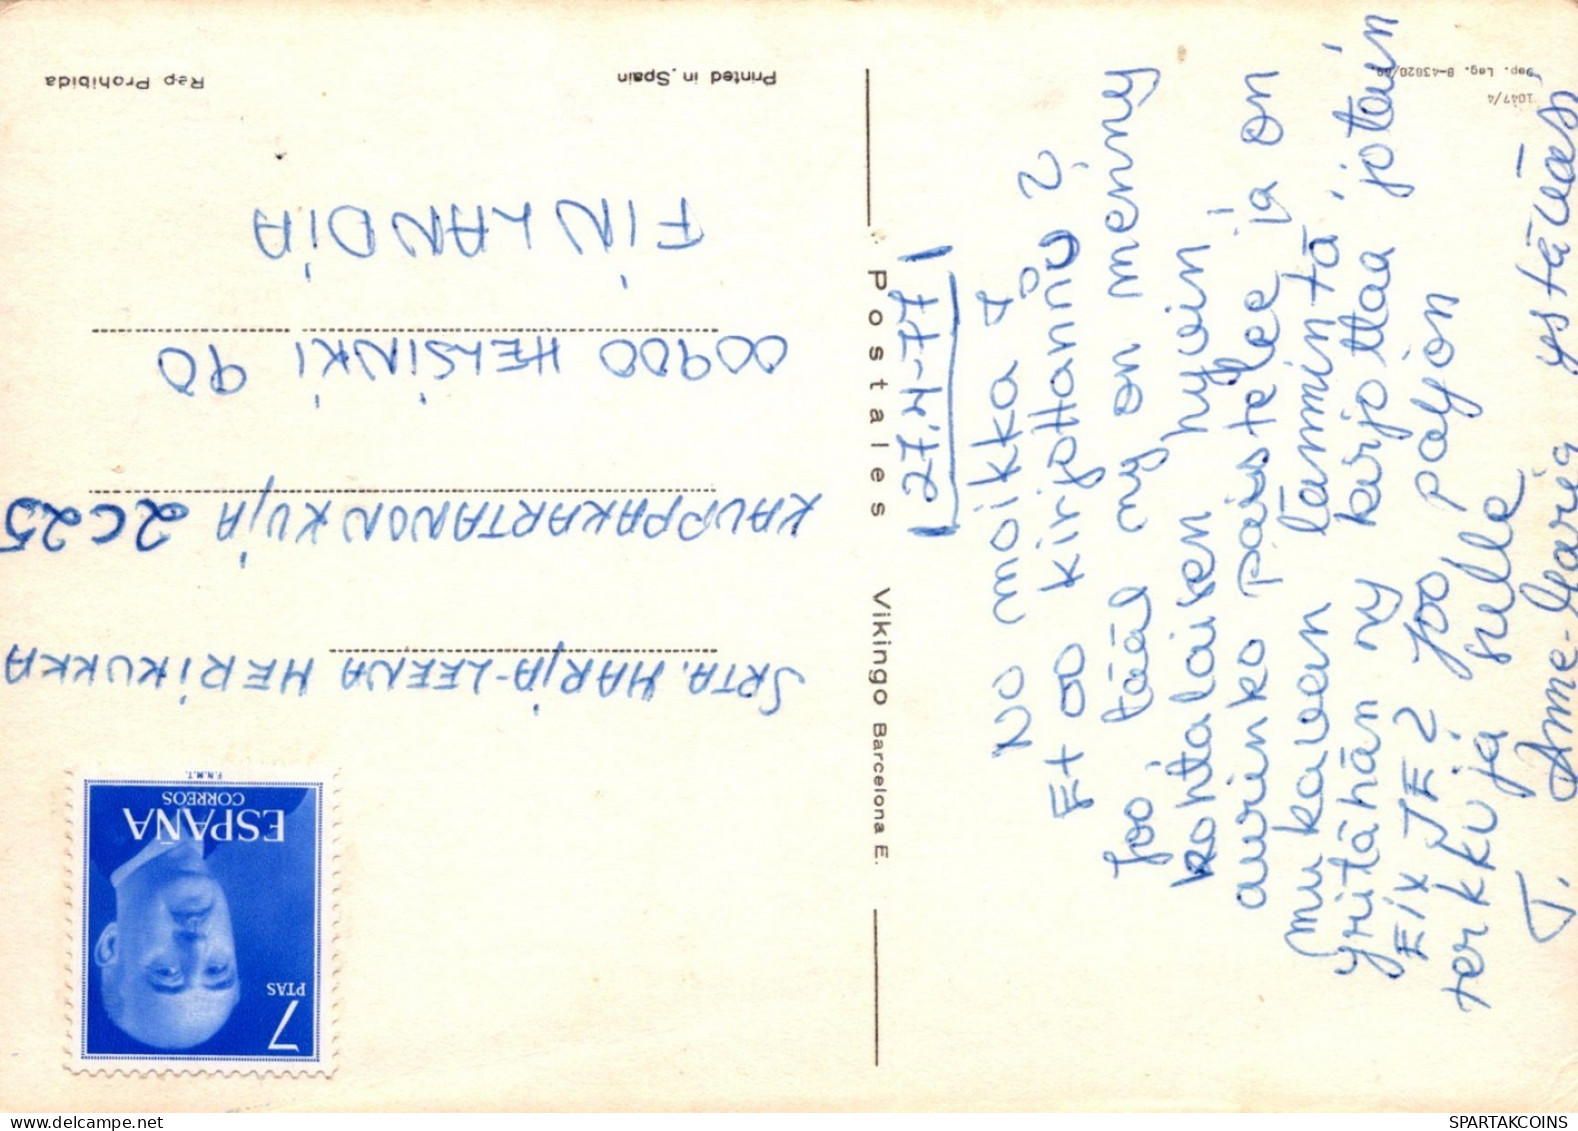 KATZE MIEZEKATZE Tier Vintage Ansichtskarte Postkarte CPSM #PAM455.A - Gatos